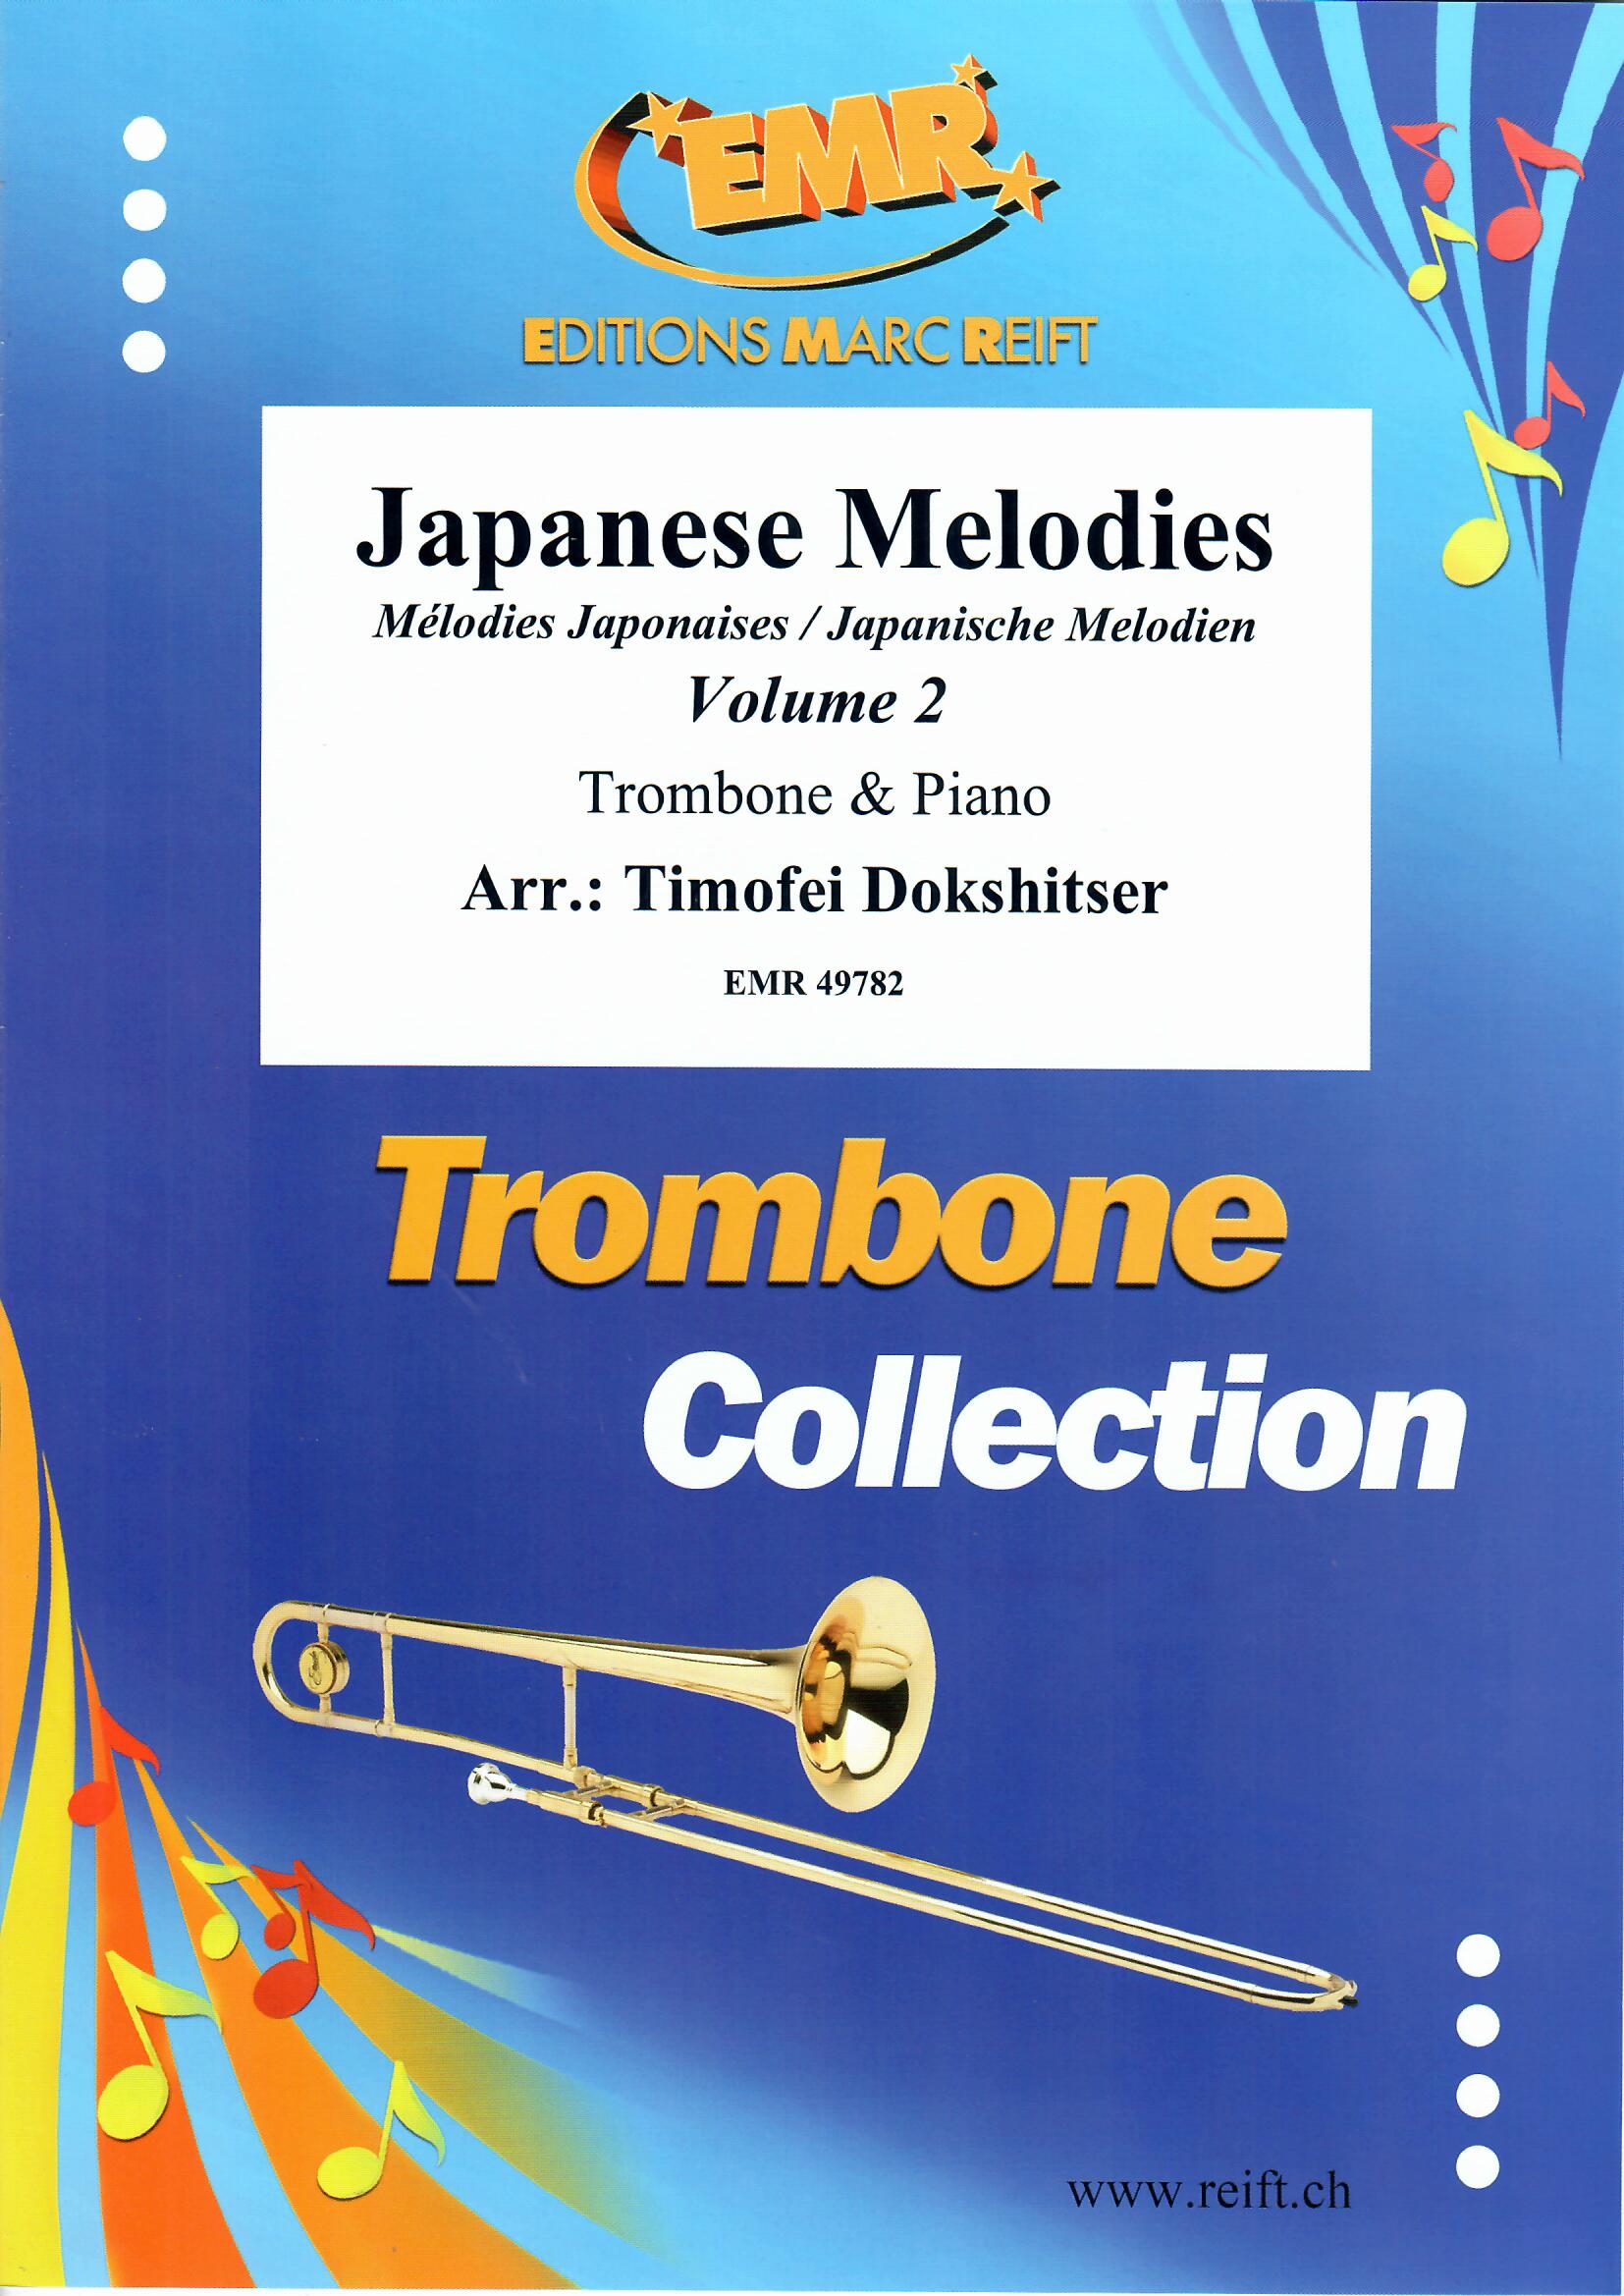 JAPANESE MELODIES VOL. 2 - Trombone & Piano